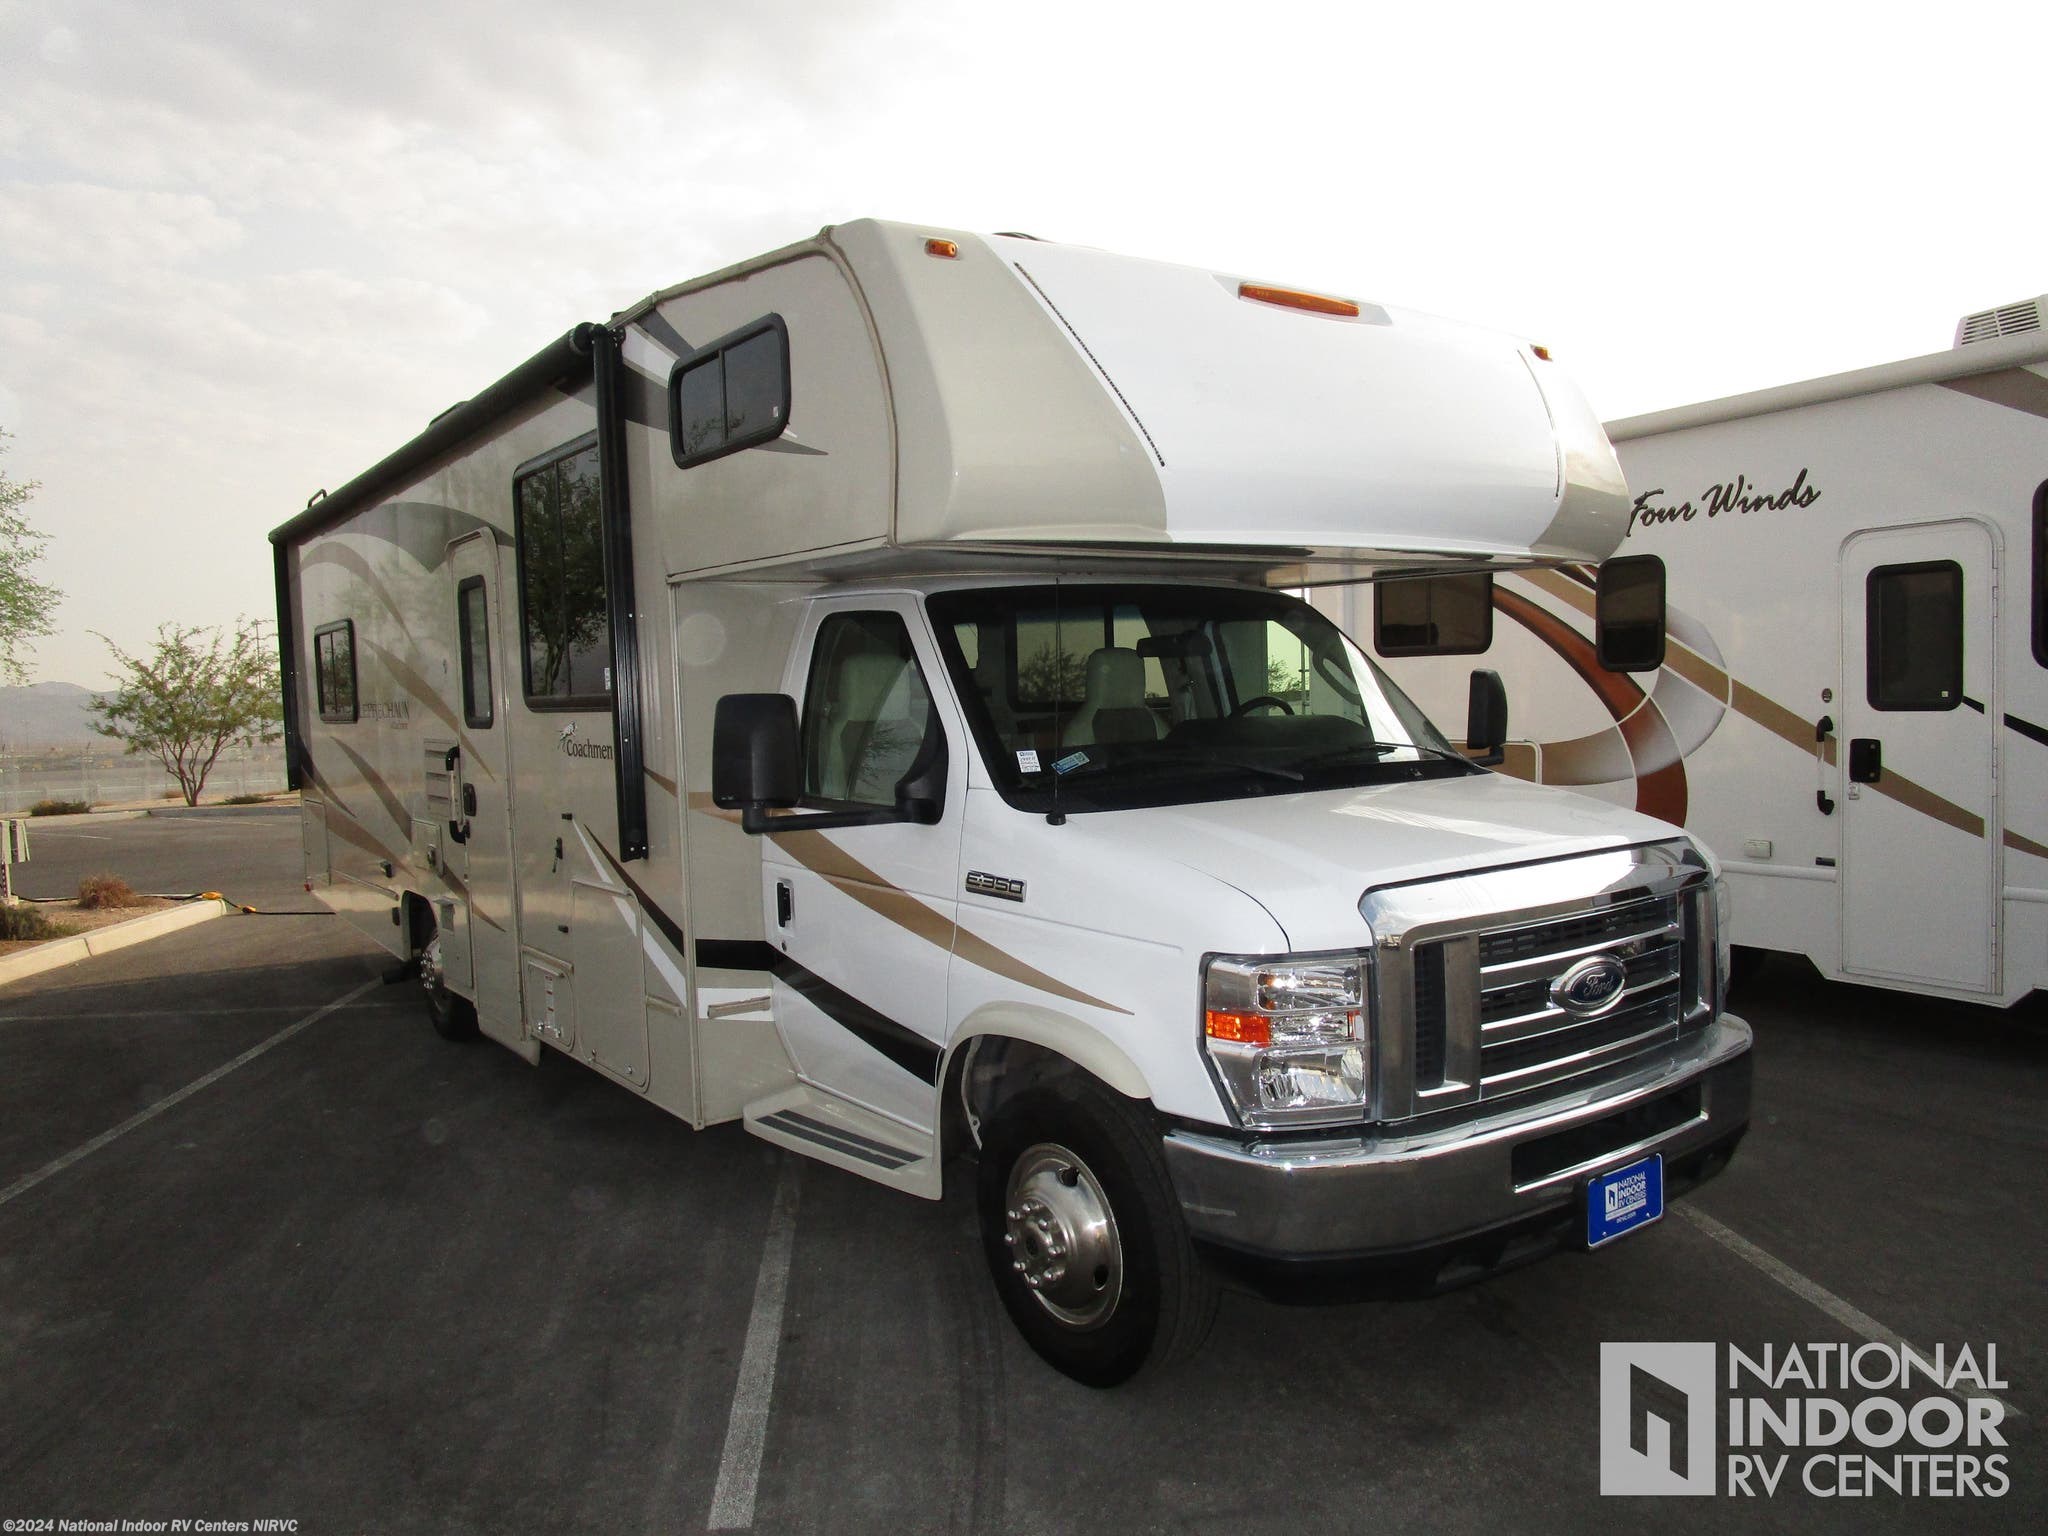 2019 Coachmen Leprechaun 27QB RV for Sale in Las Vegas, NV 89115 | 5888U | www.bagsaleusa.com Classifieds